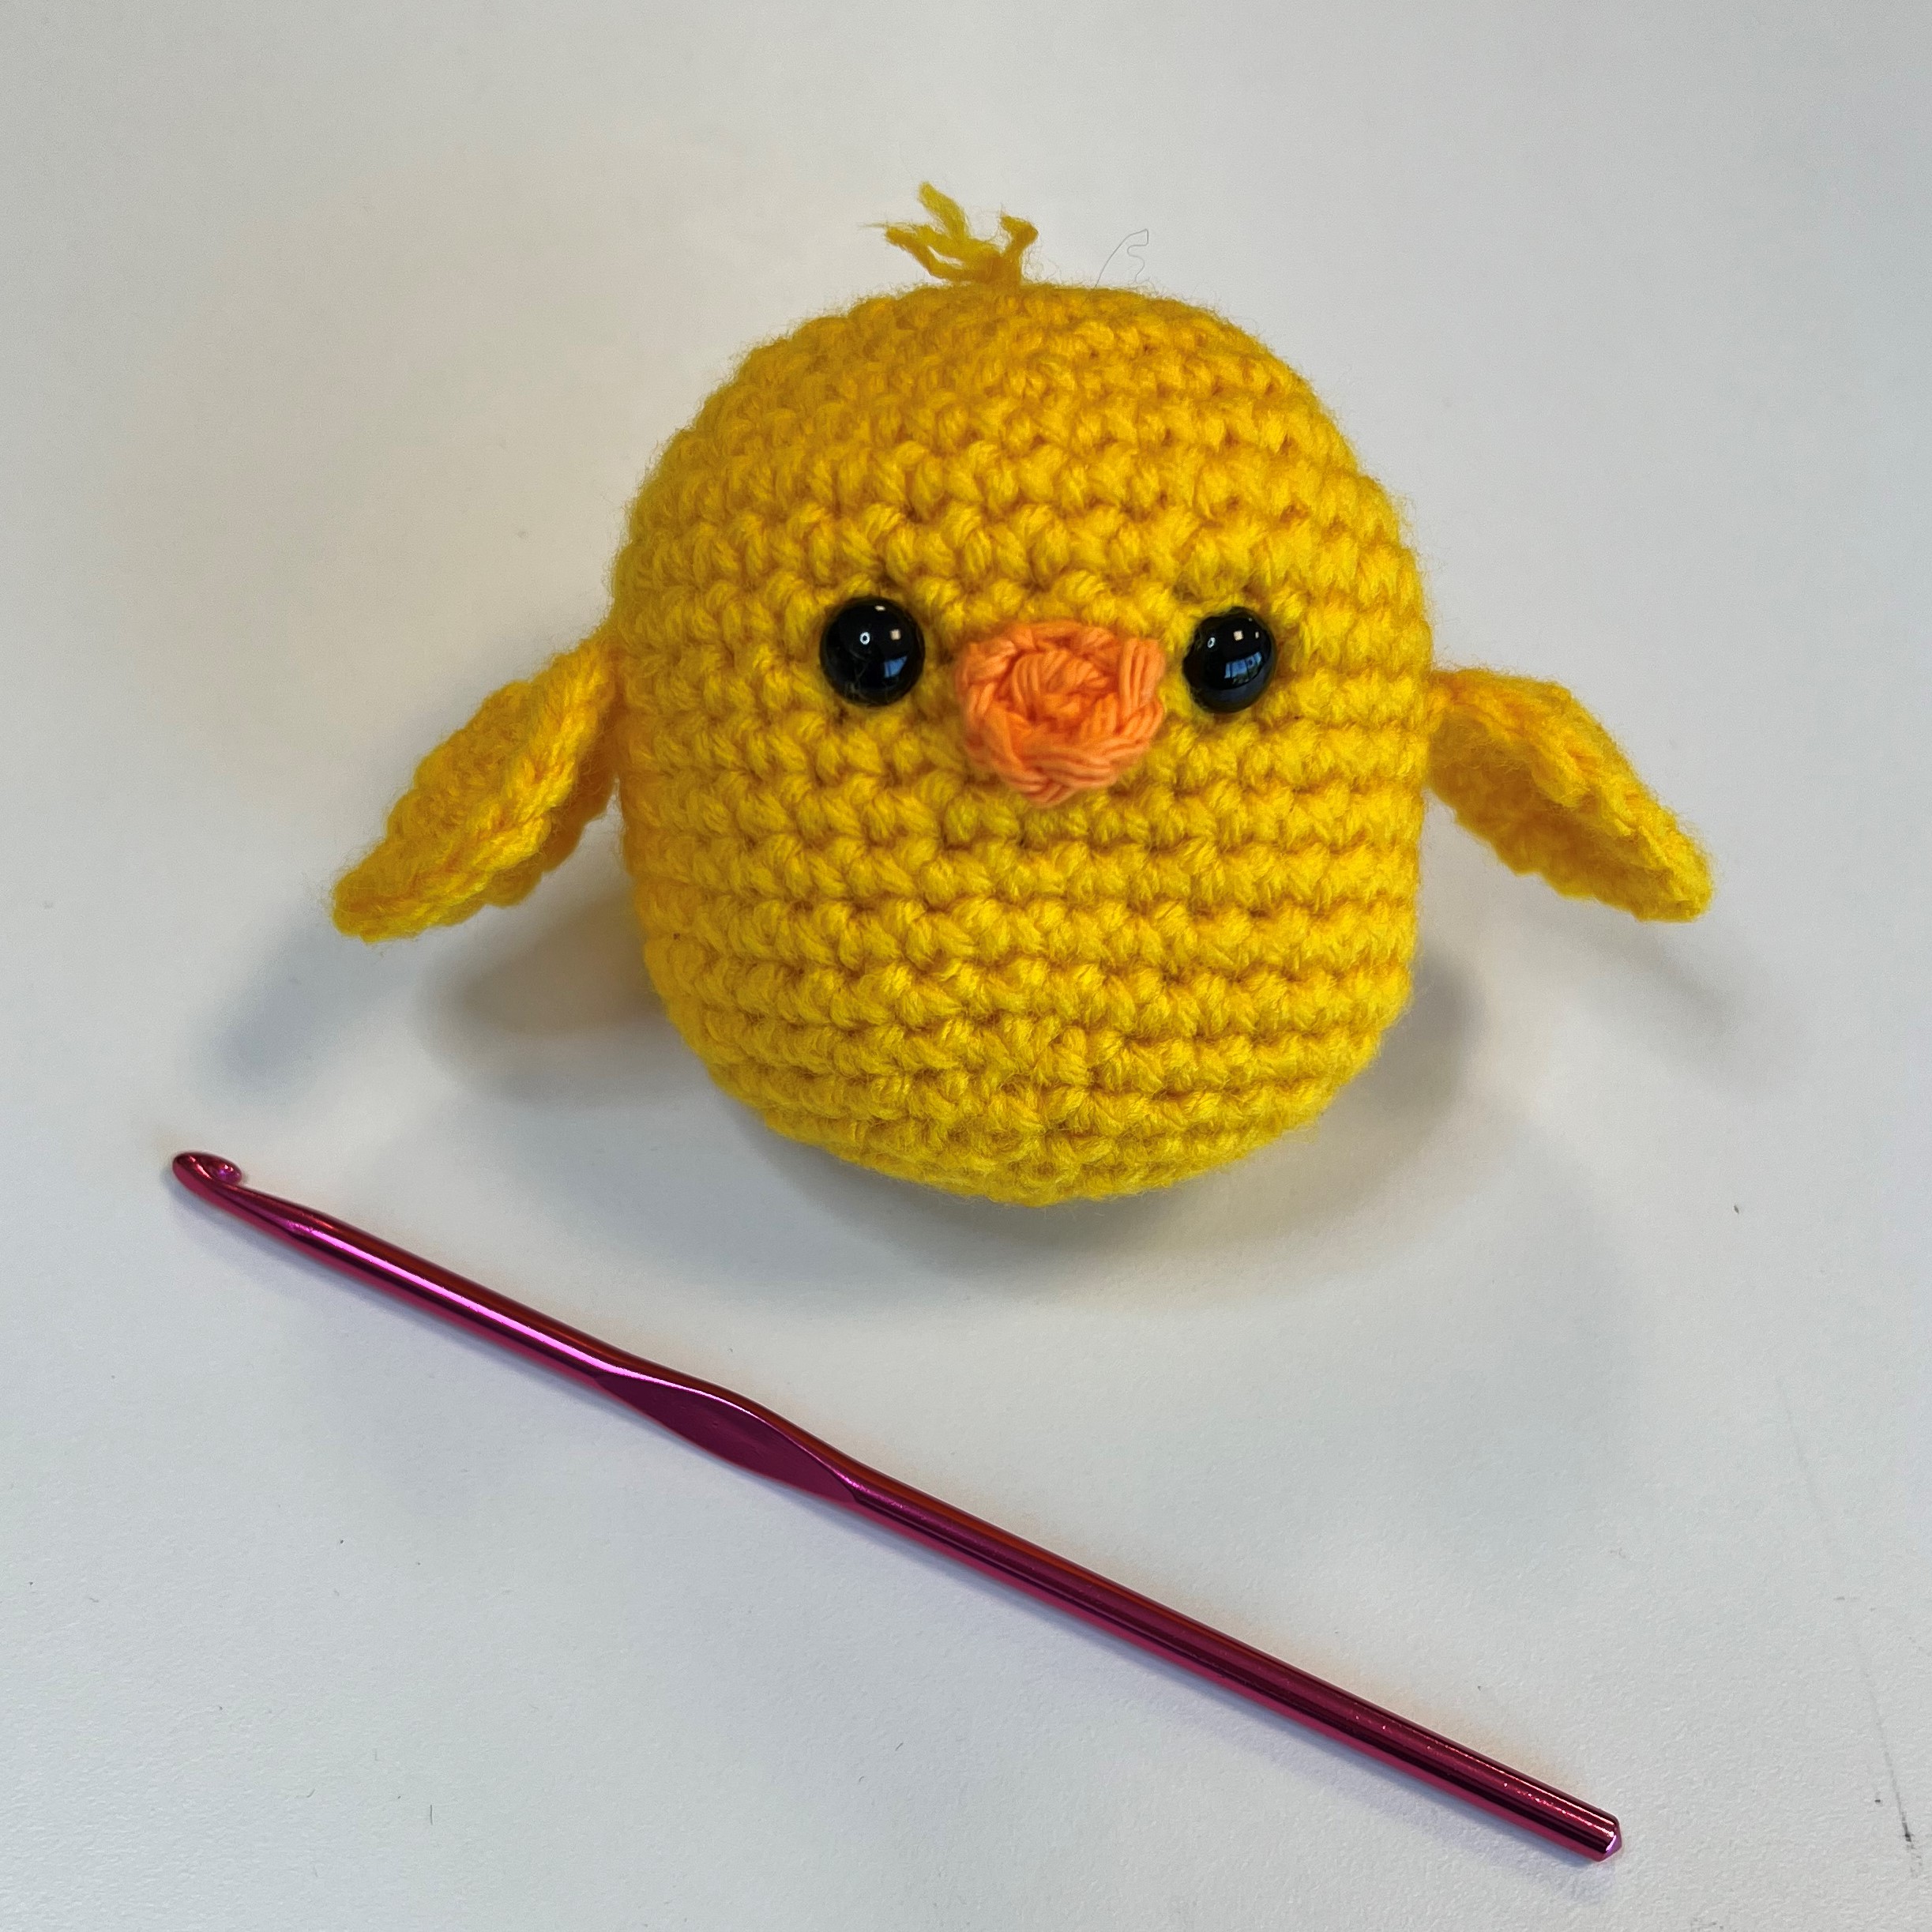 Small crocheted bird